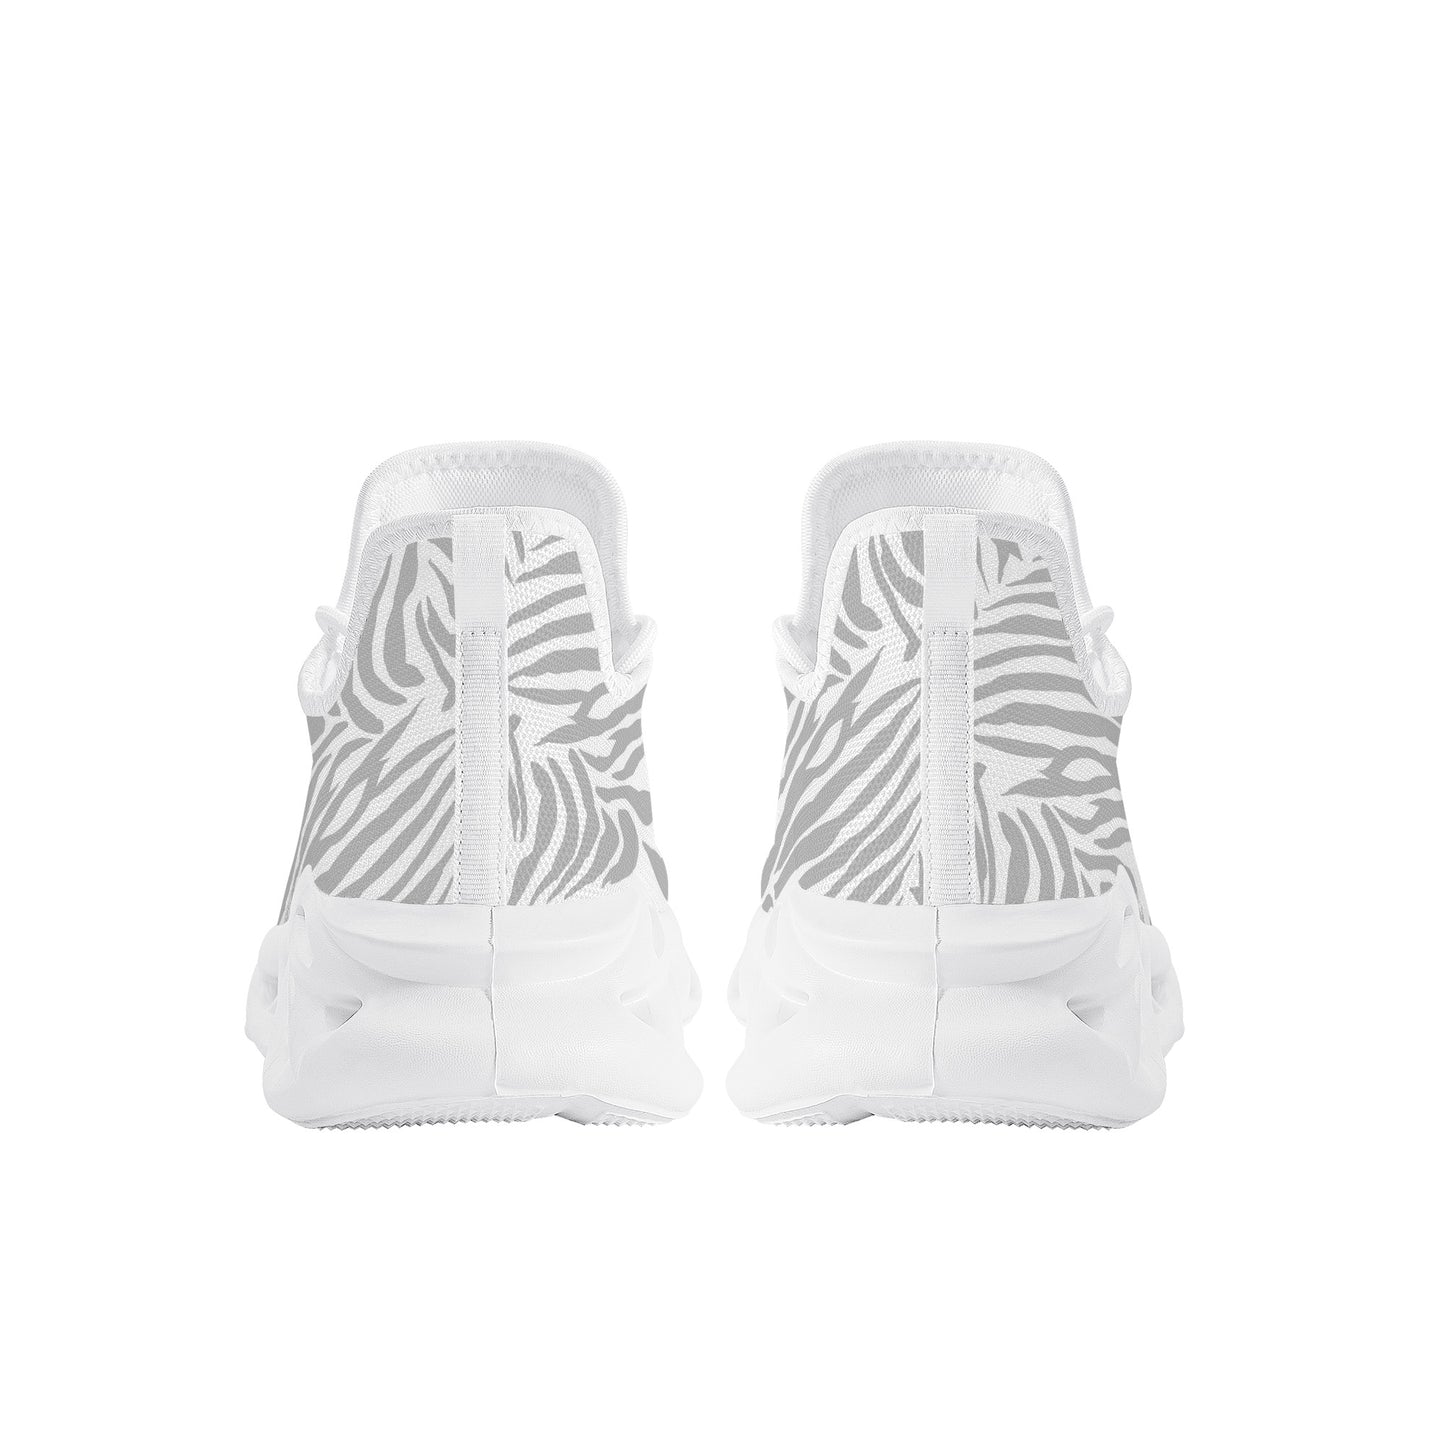 "Nix Zebra" Flex Control Sneaker